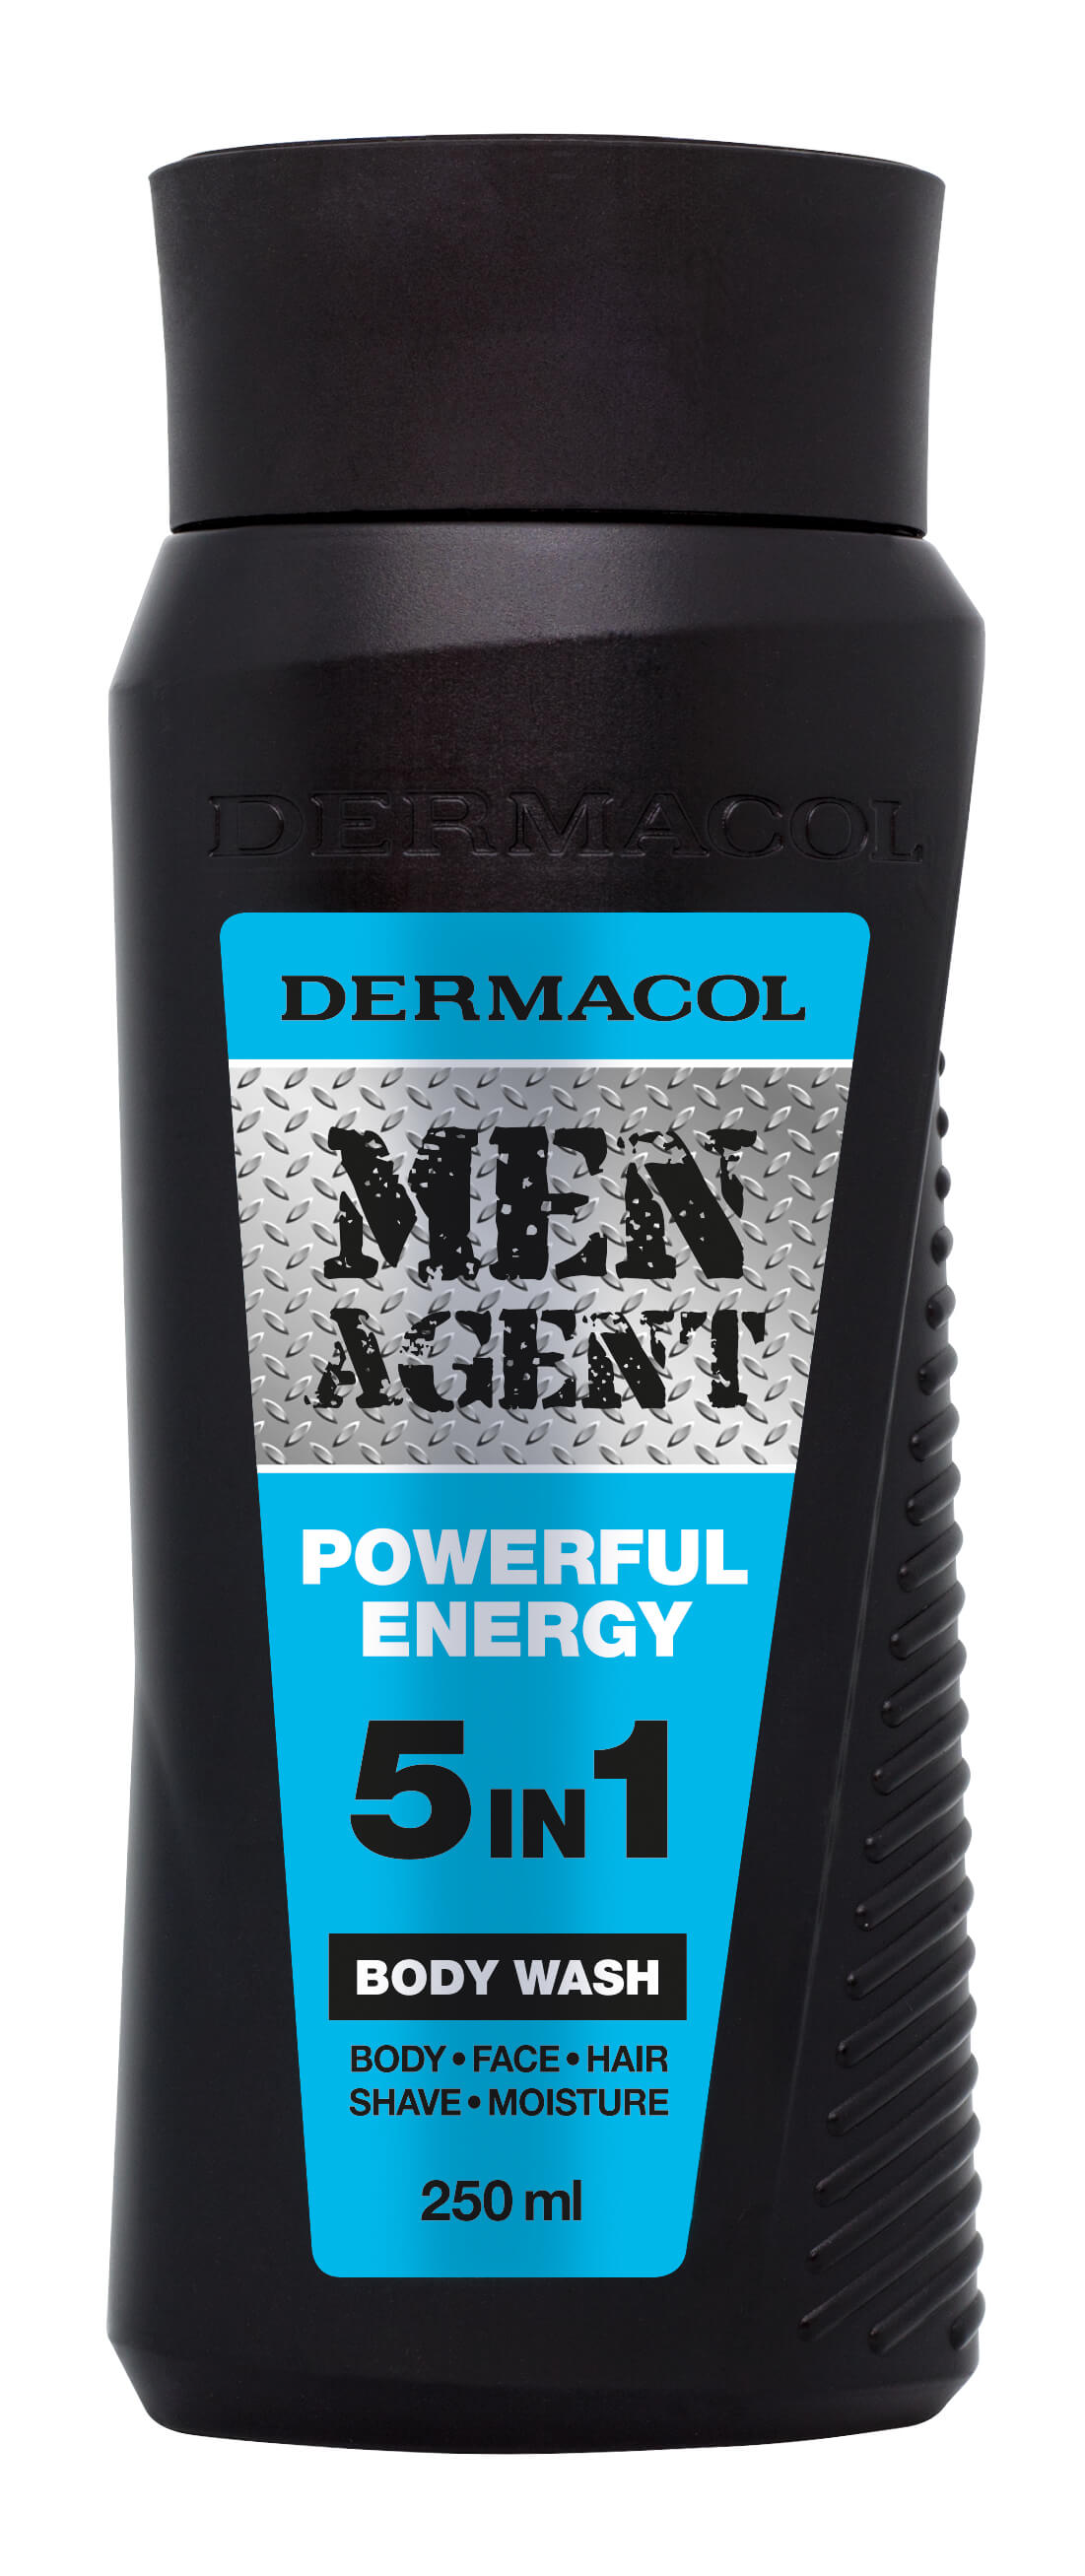 Sprchový gel pro muže 5v1 Powerful Energy Men Agent (Body Wash) 250 ml